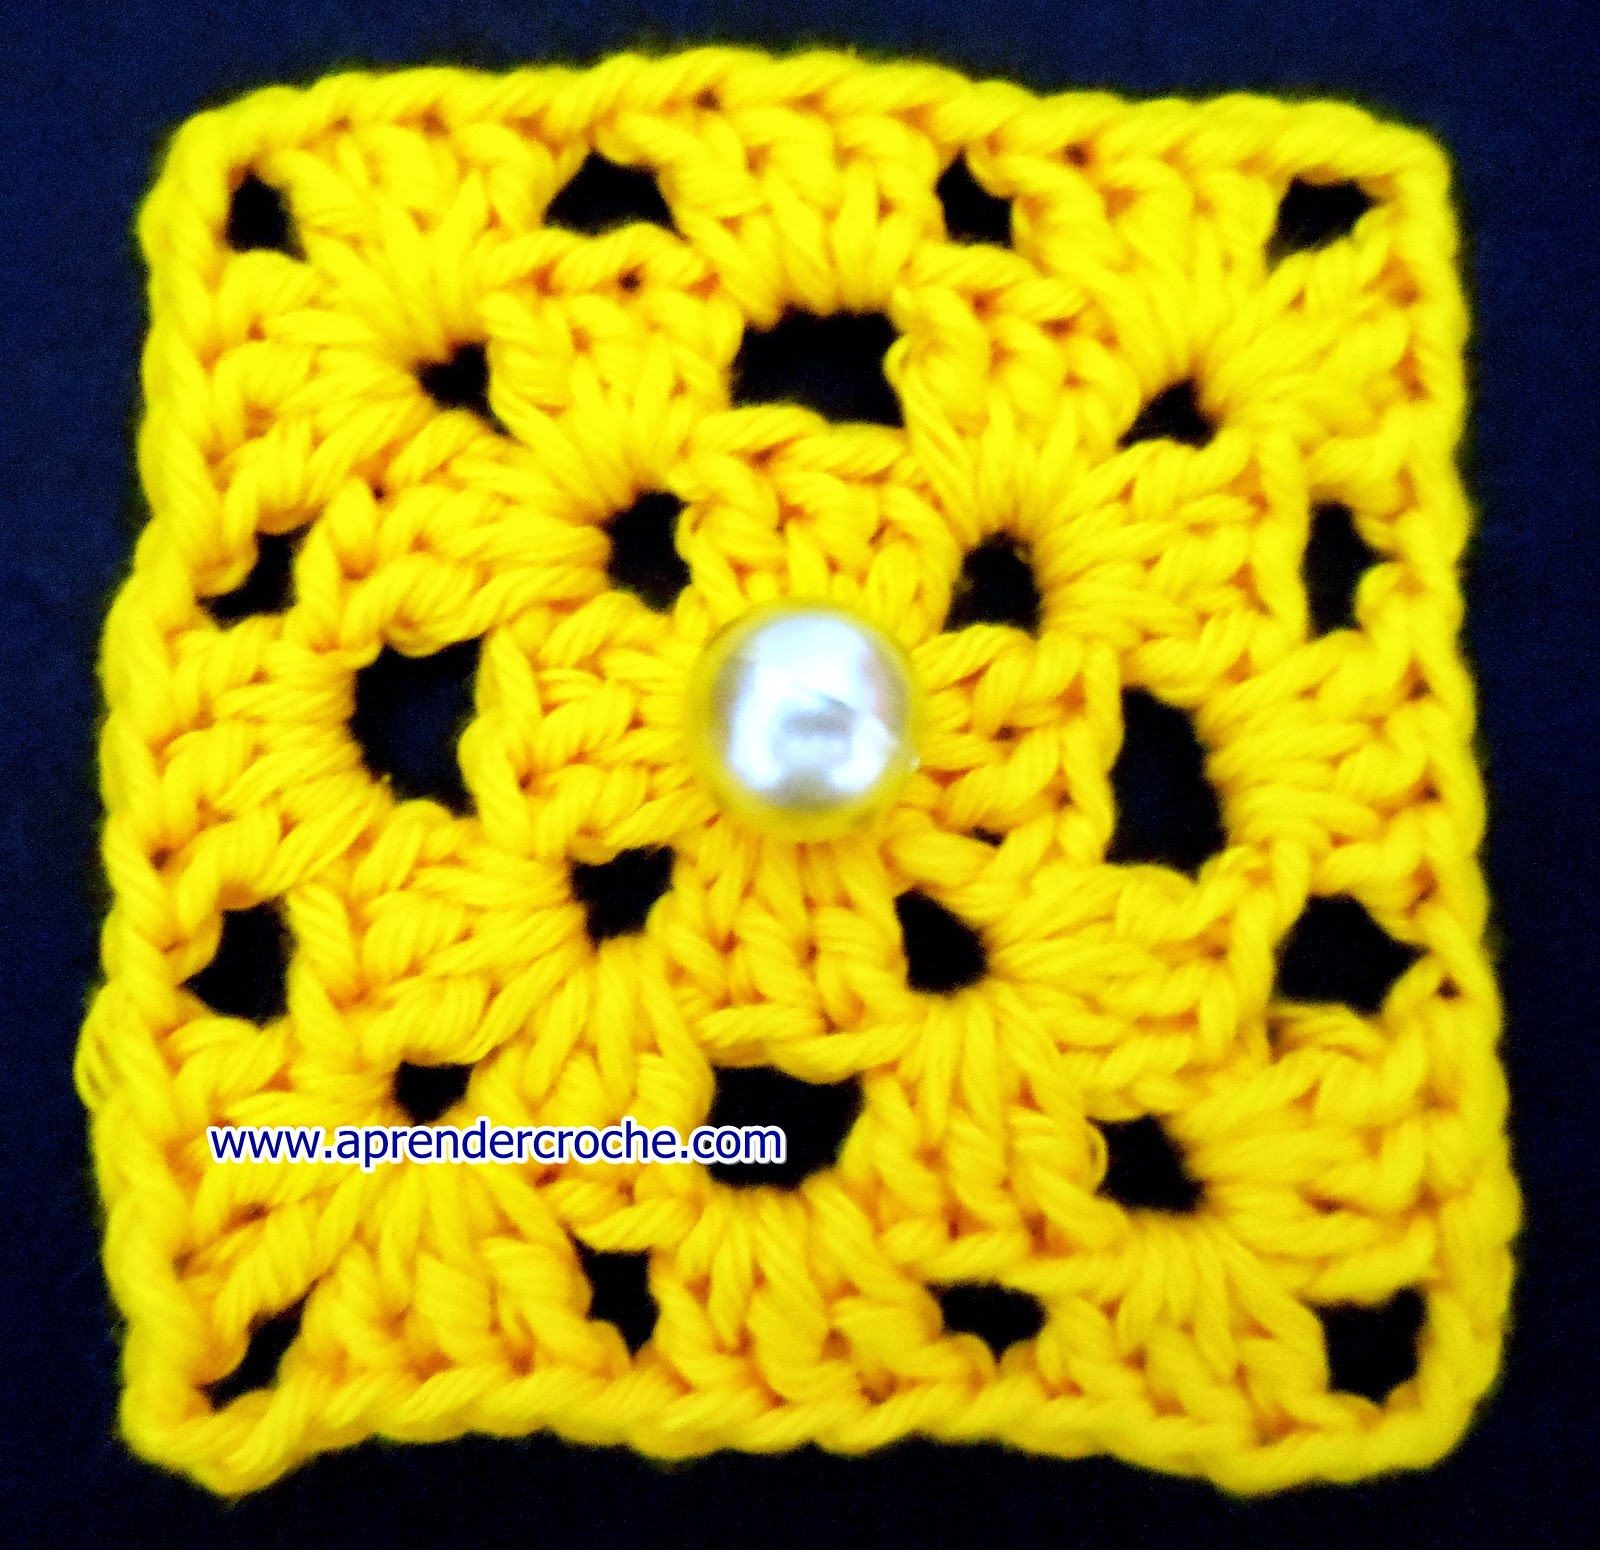 aprender croche square quadrado perfeito cenoura amarelo emenda perfeita edinir-croche loja frete gratis youtube facebook